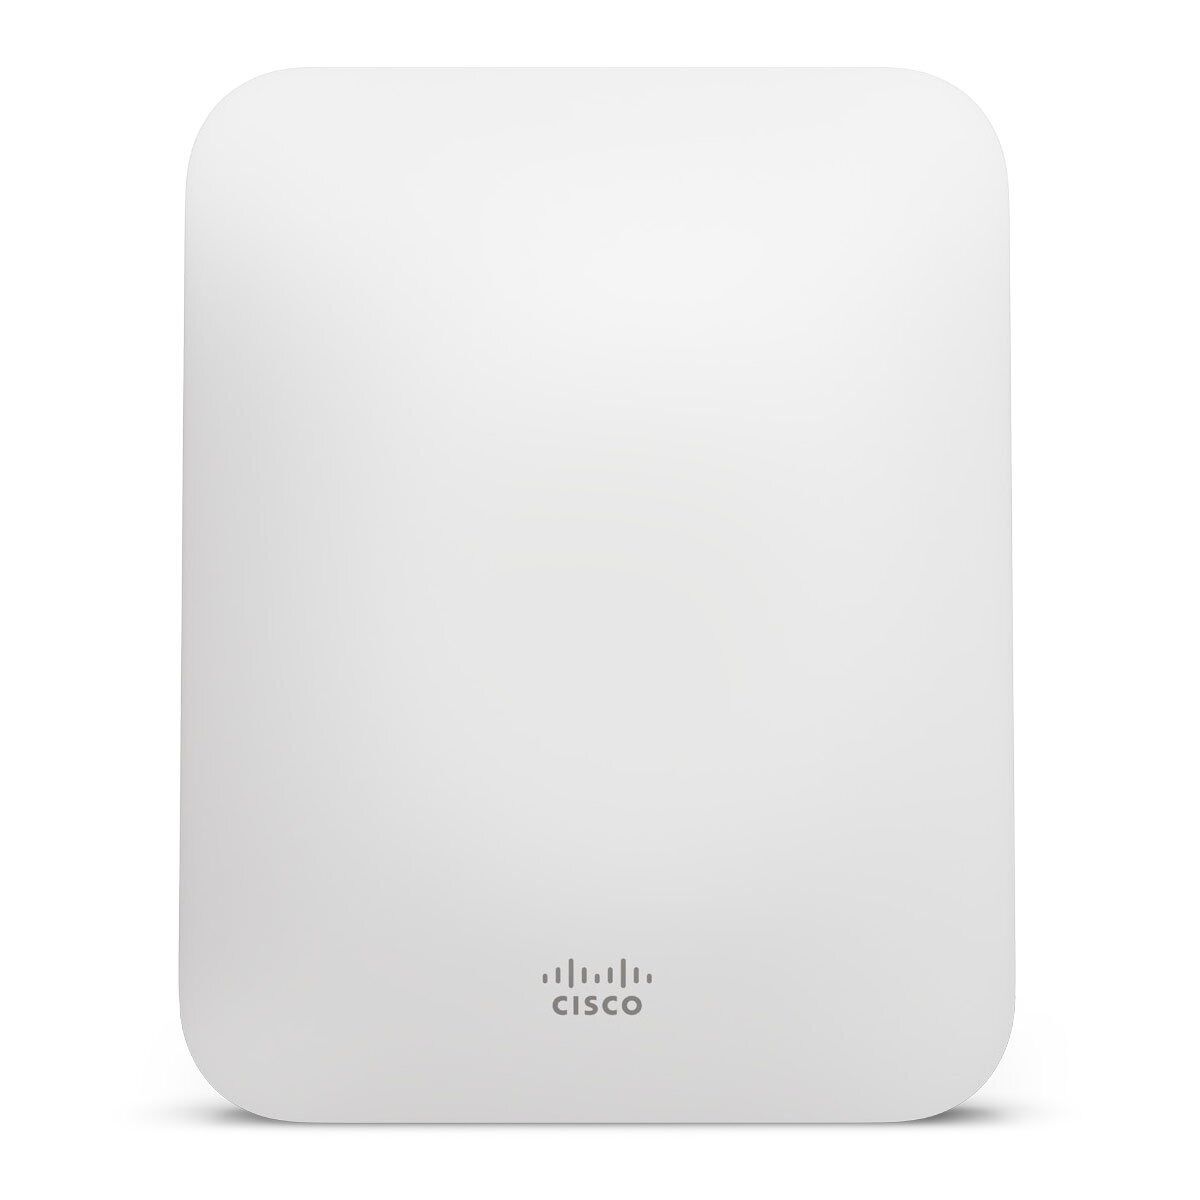 Cisco Meraki Cloud Managed MR18 Wireless Network Access Point - 600Mbps +